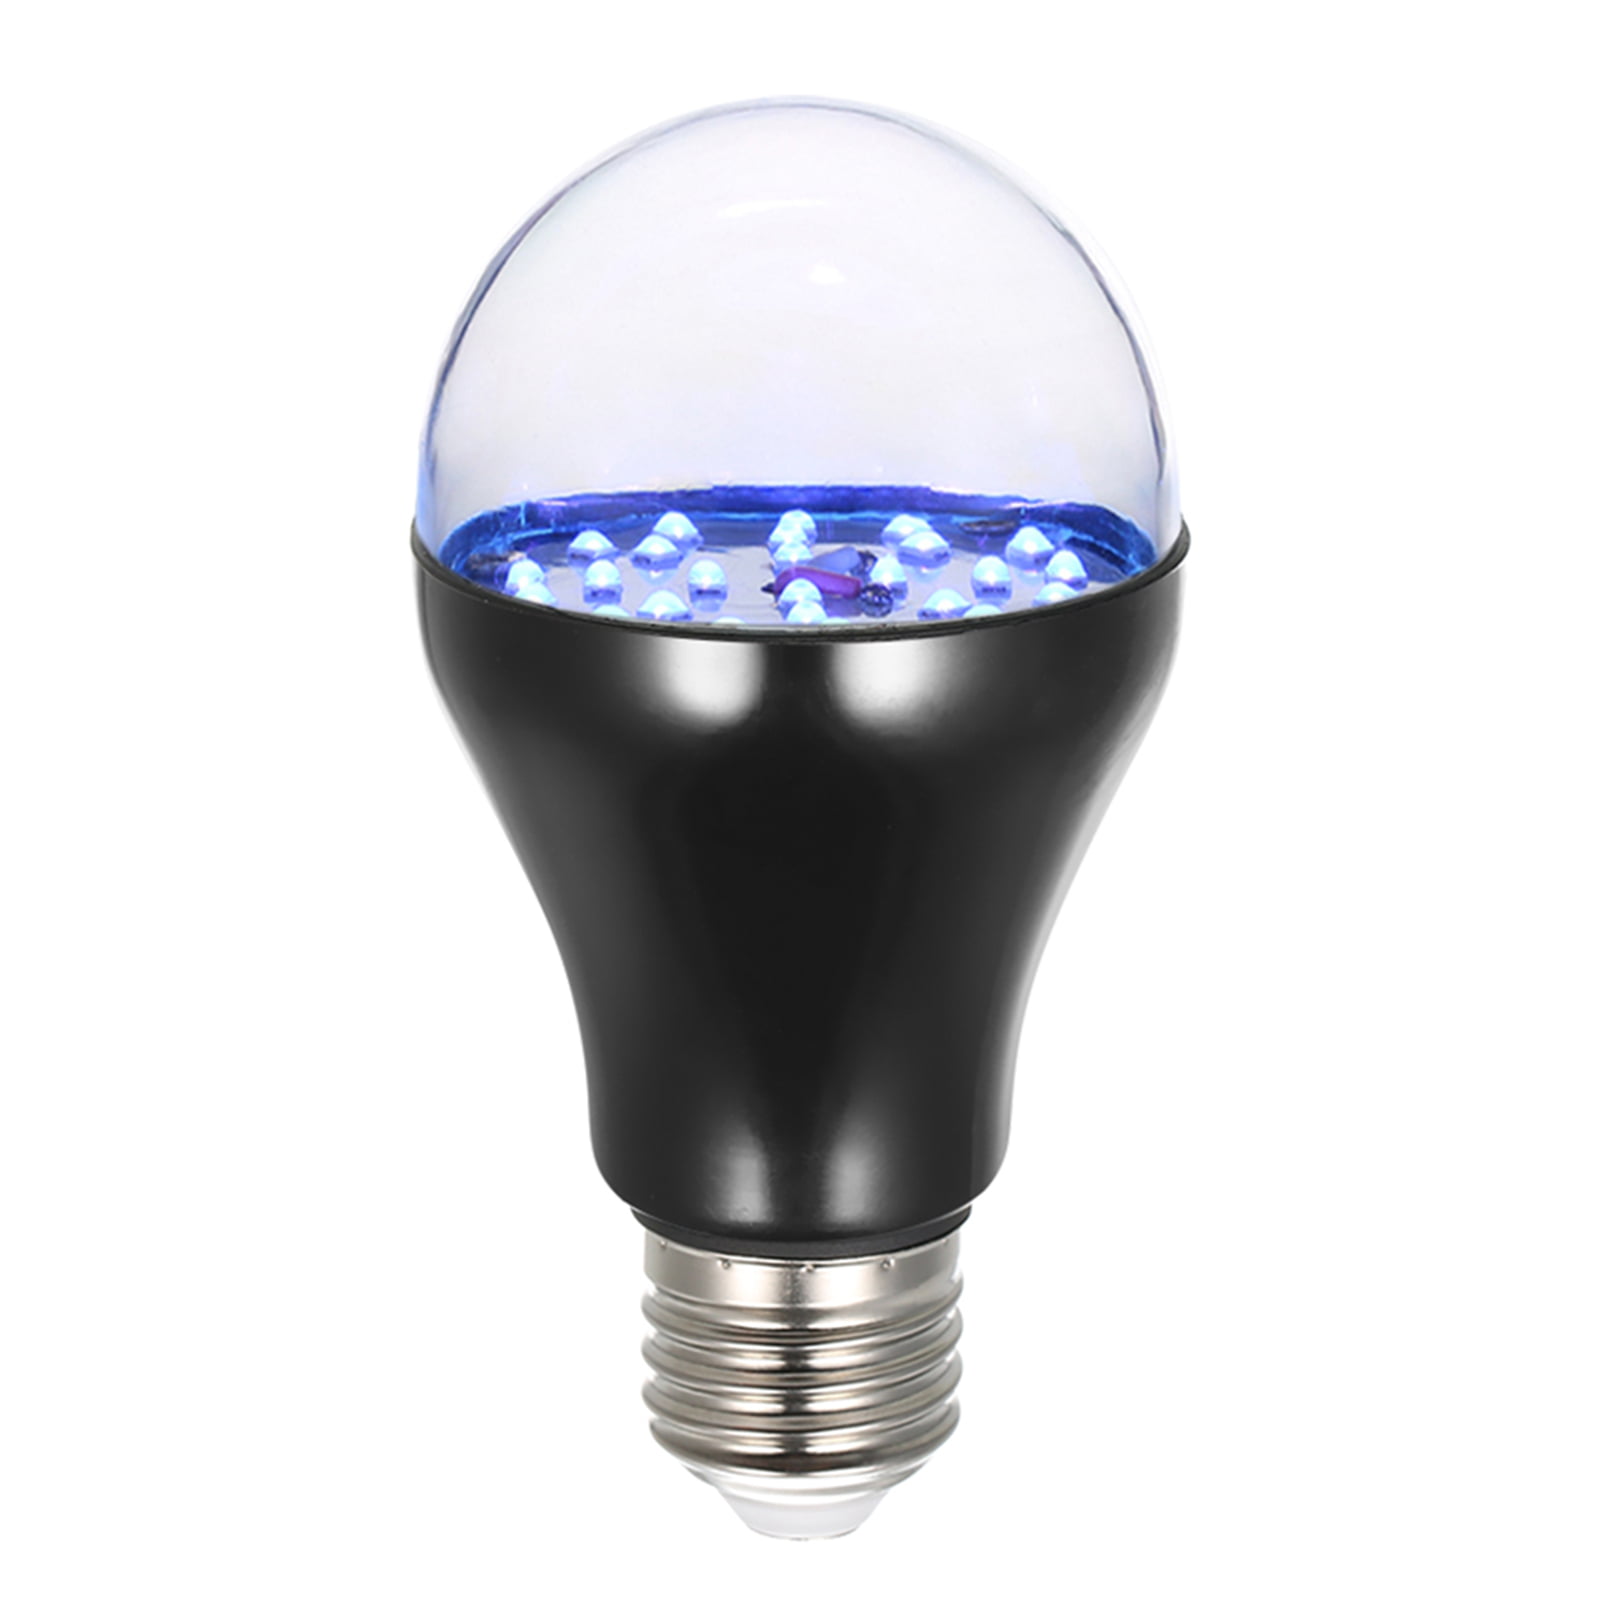 Walmeck 365nm UV Light Bulb Blacklight E27 Lamp Base Sterilization Monetary Validation